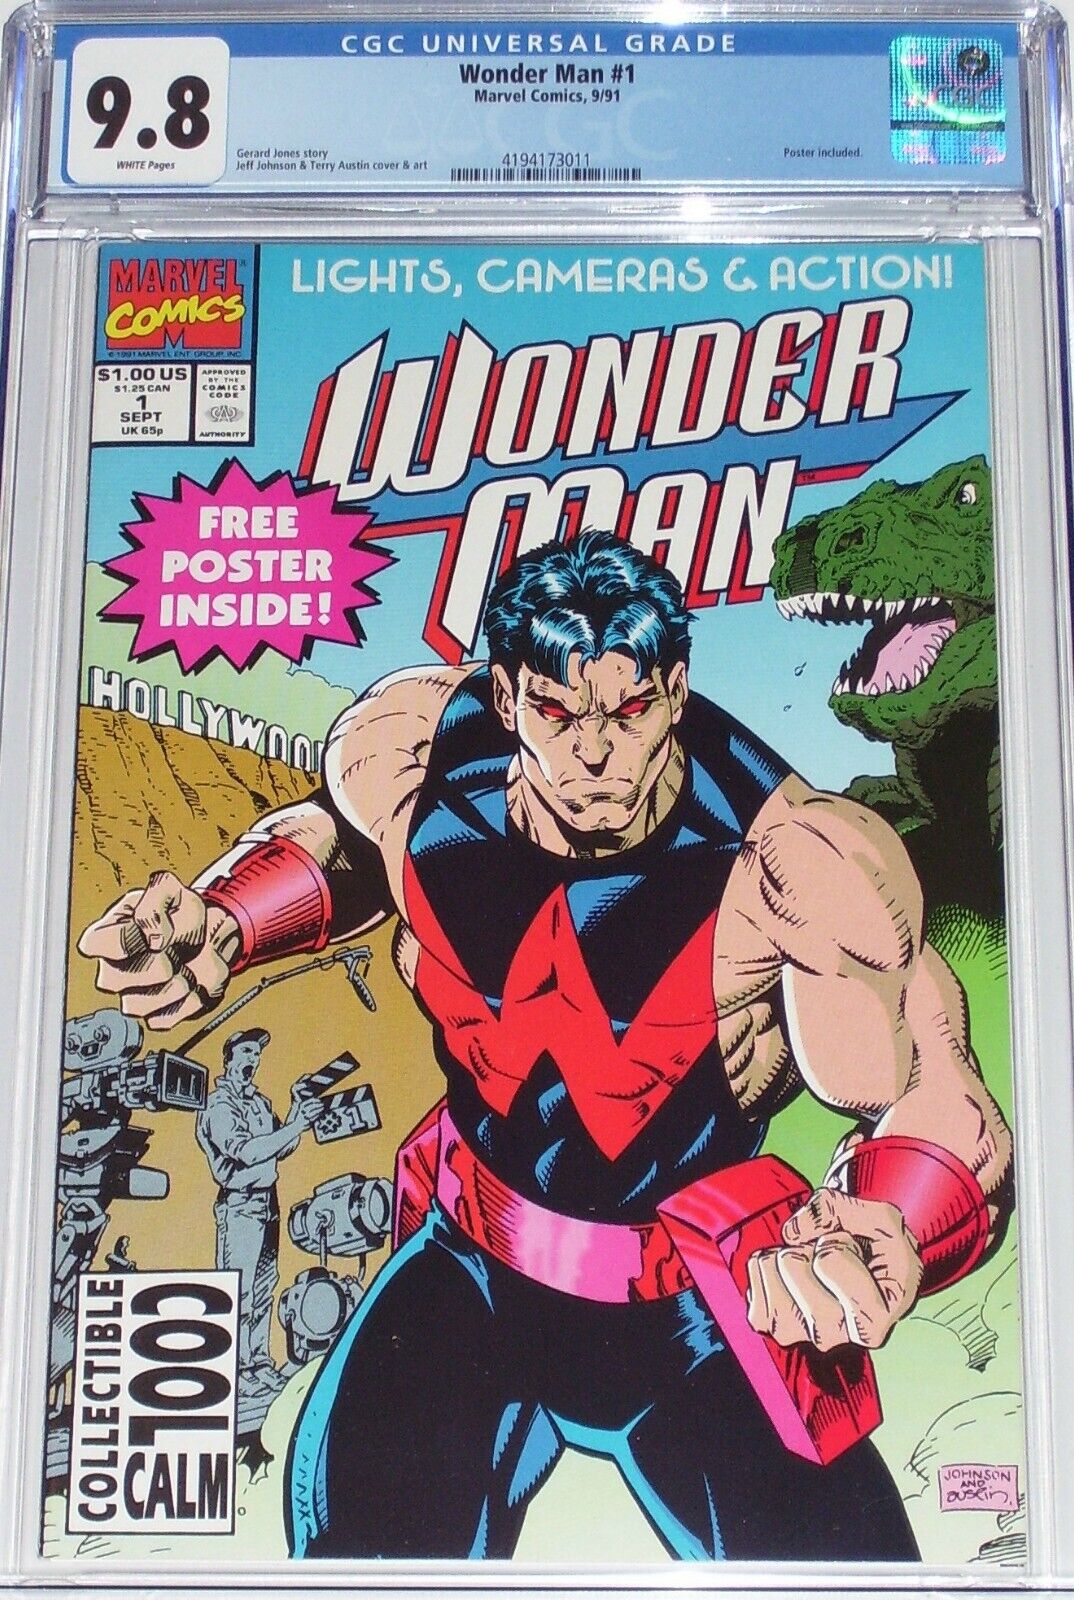 Wonder Man #1 CGC 9.8 from Sept 1991